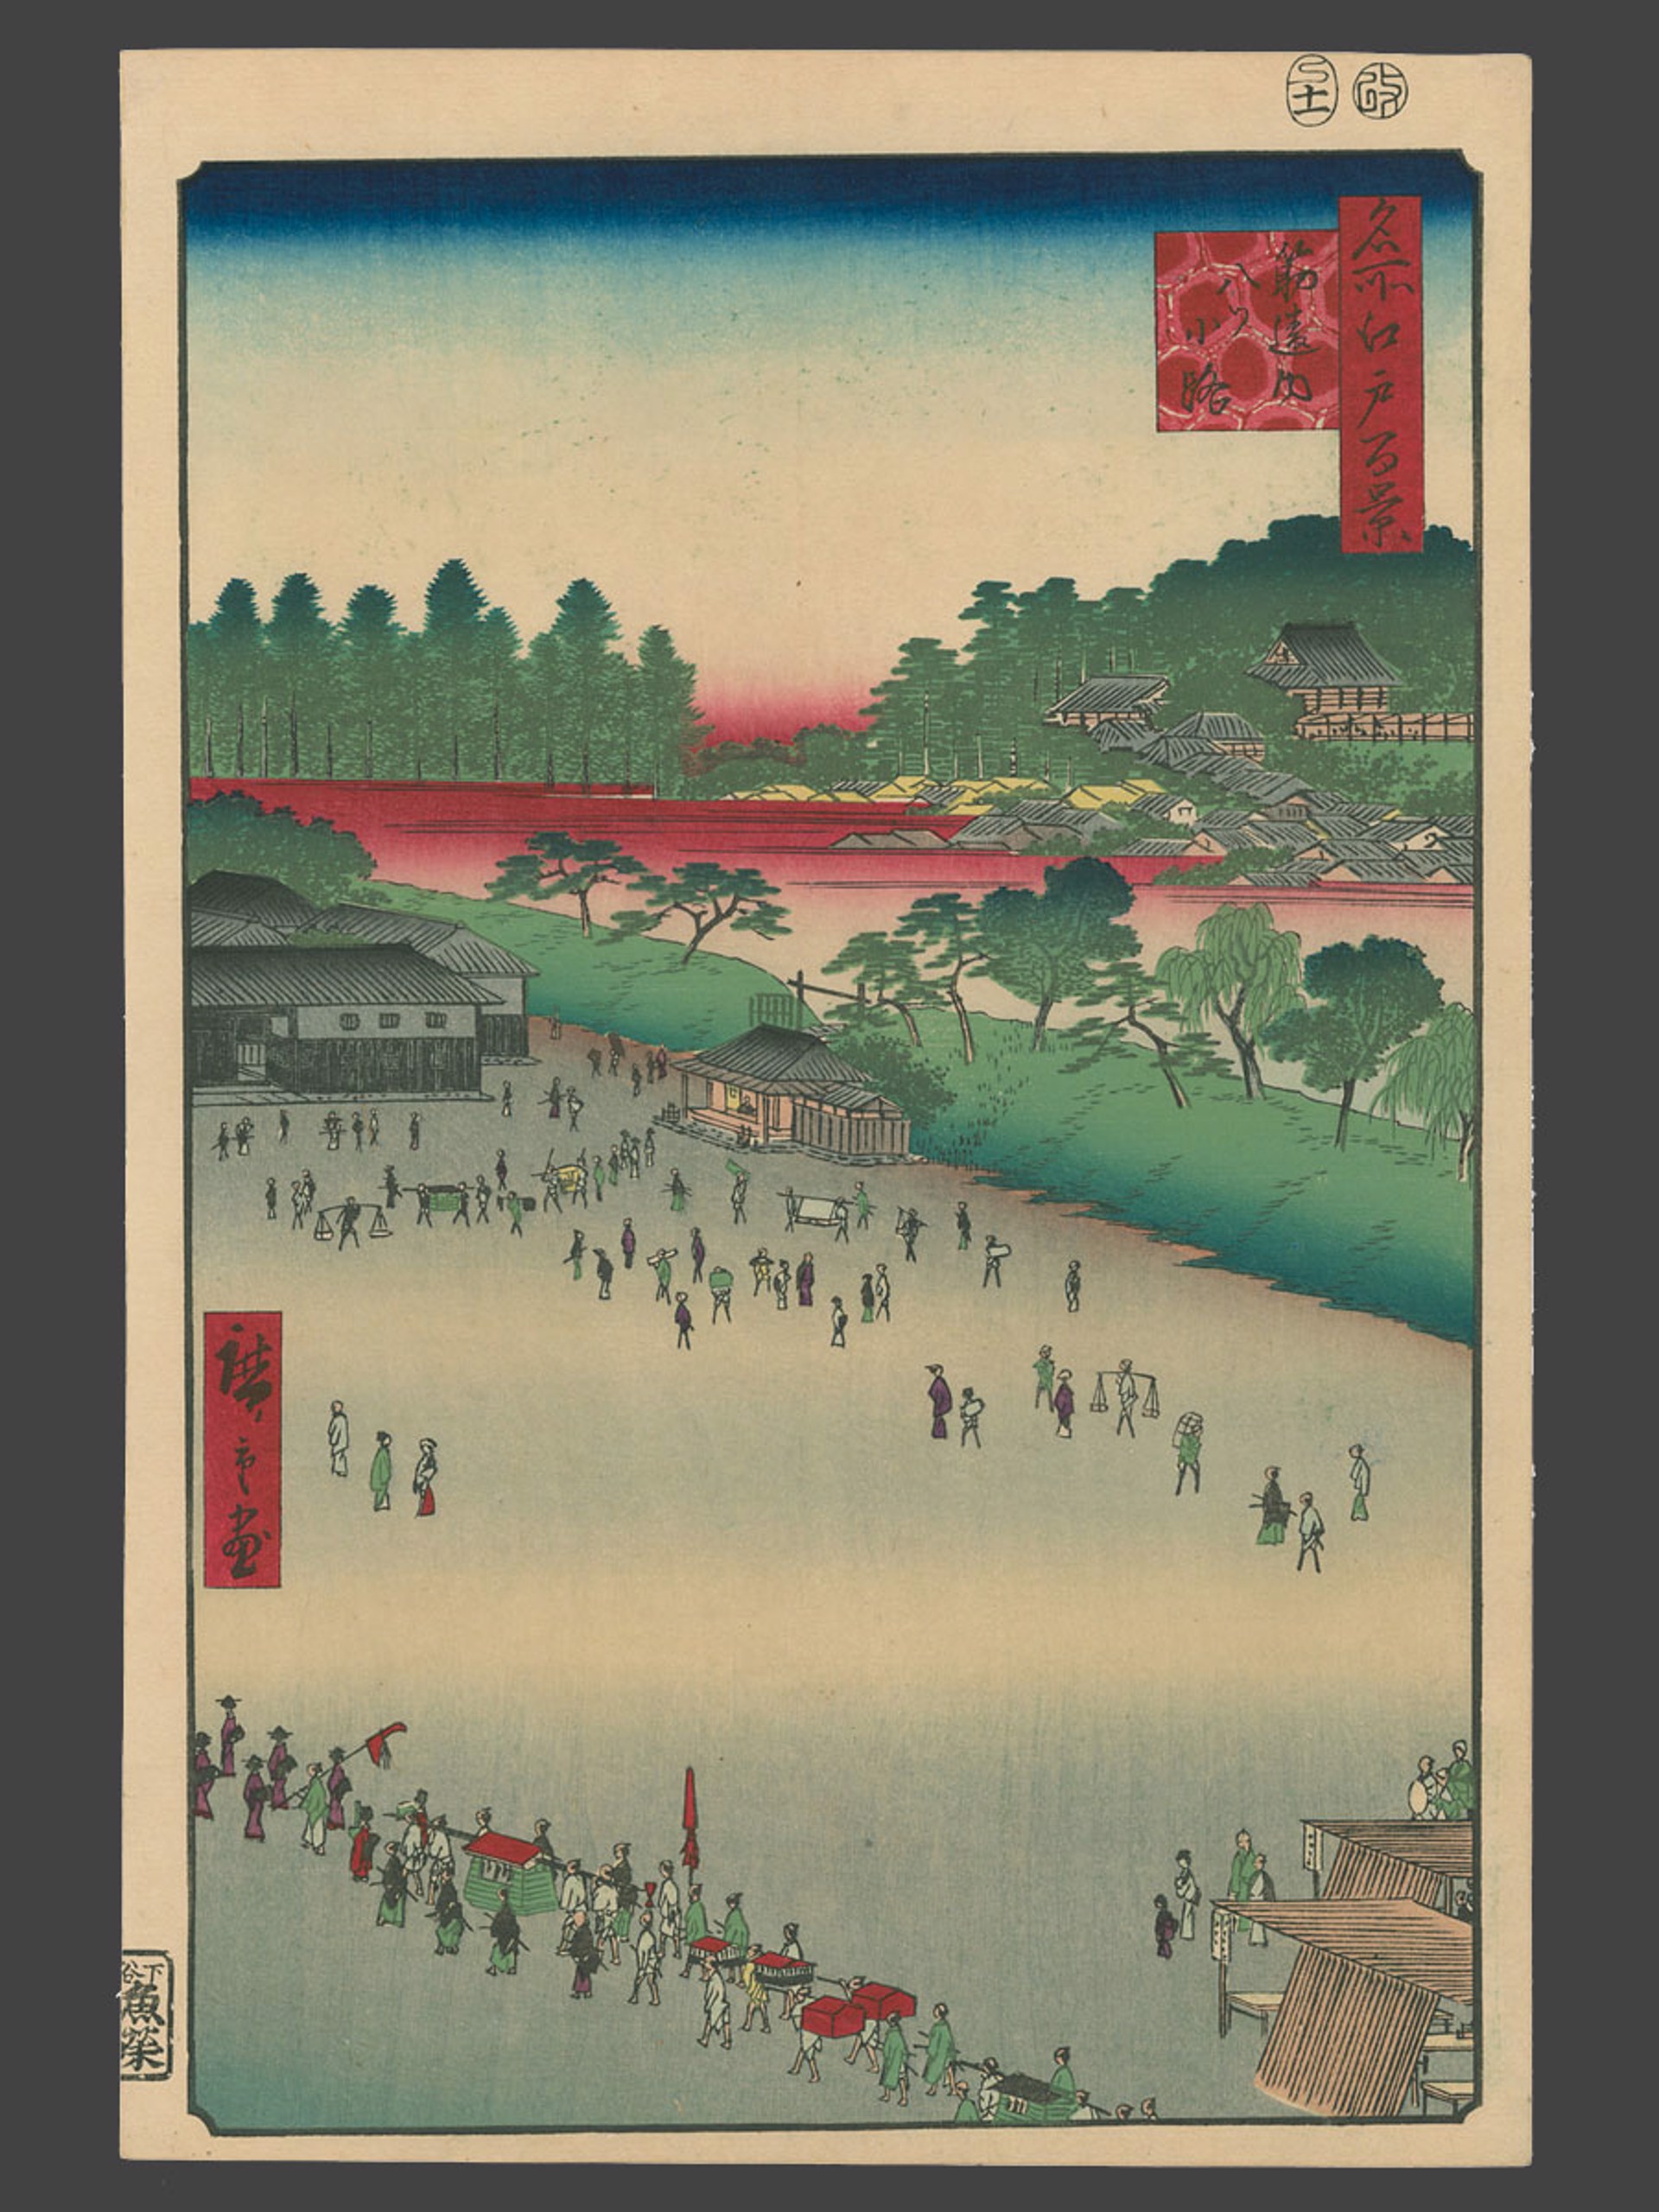 #9 Yatsukoji, Inside Sujikai Gate 100 Views of Edo by Hiroshige